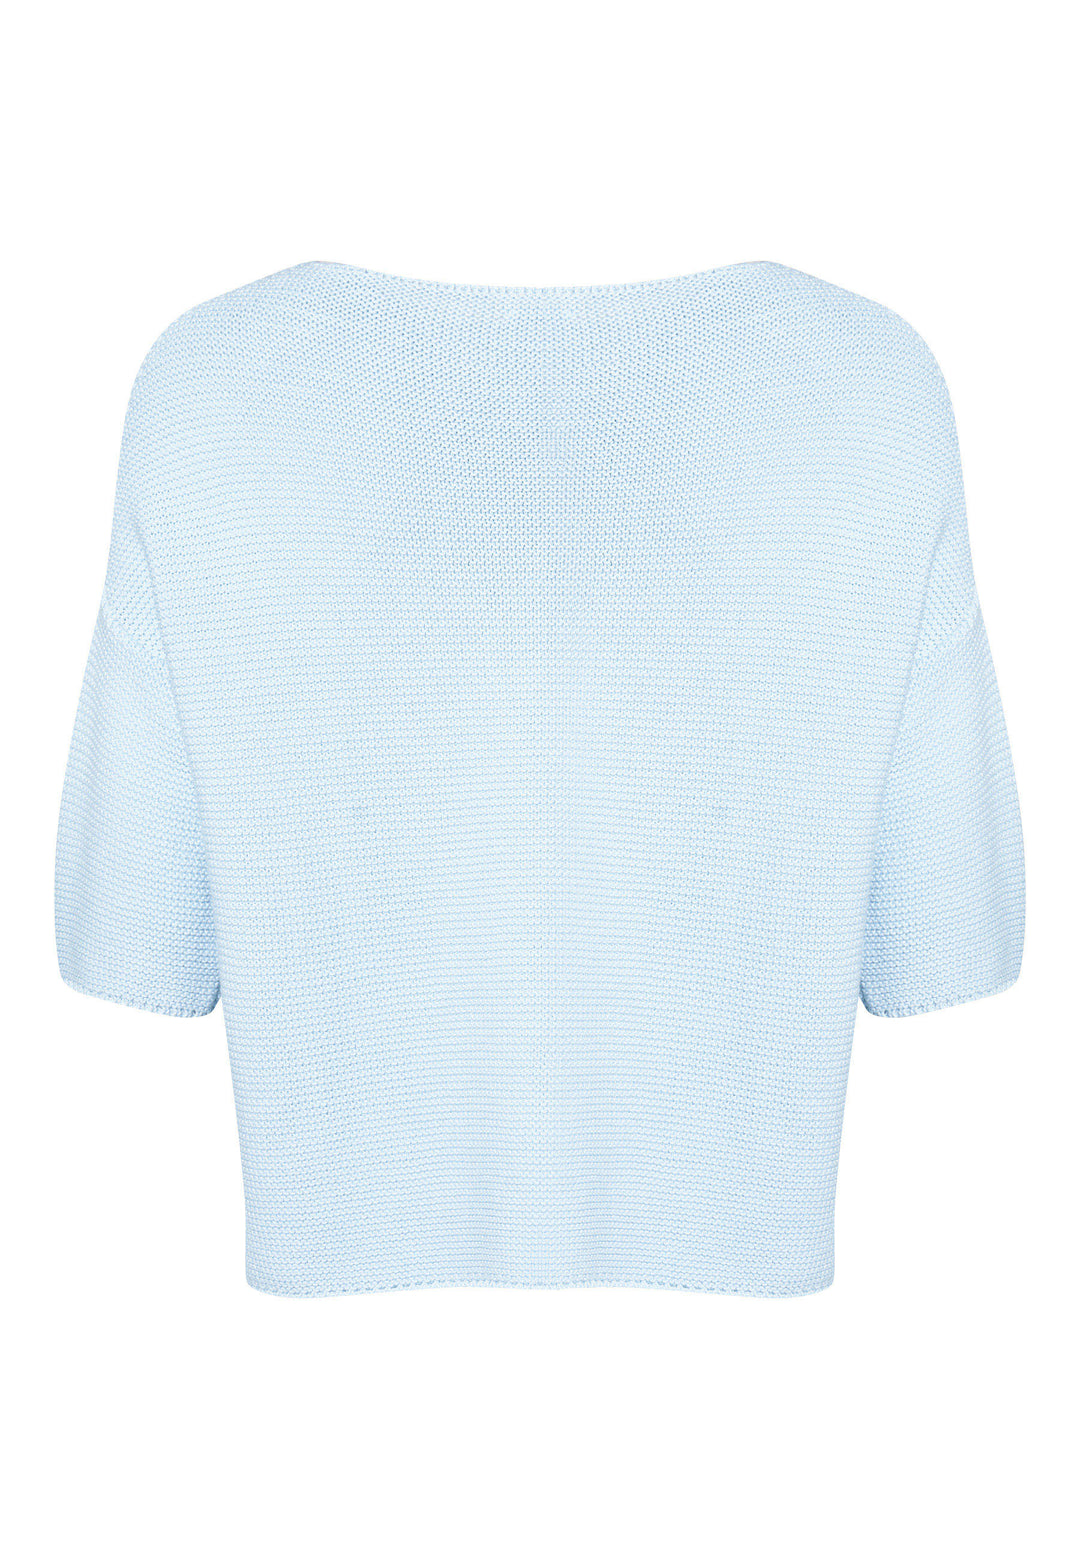 Lind LiCarina Knit Pullover 5000 LIGHT BLUE